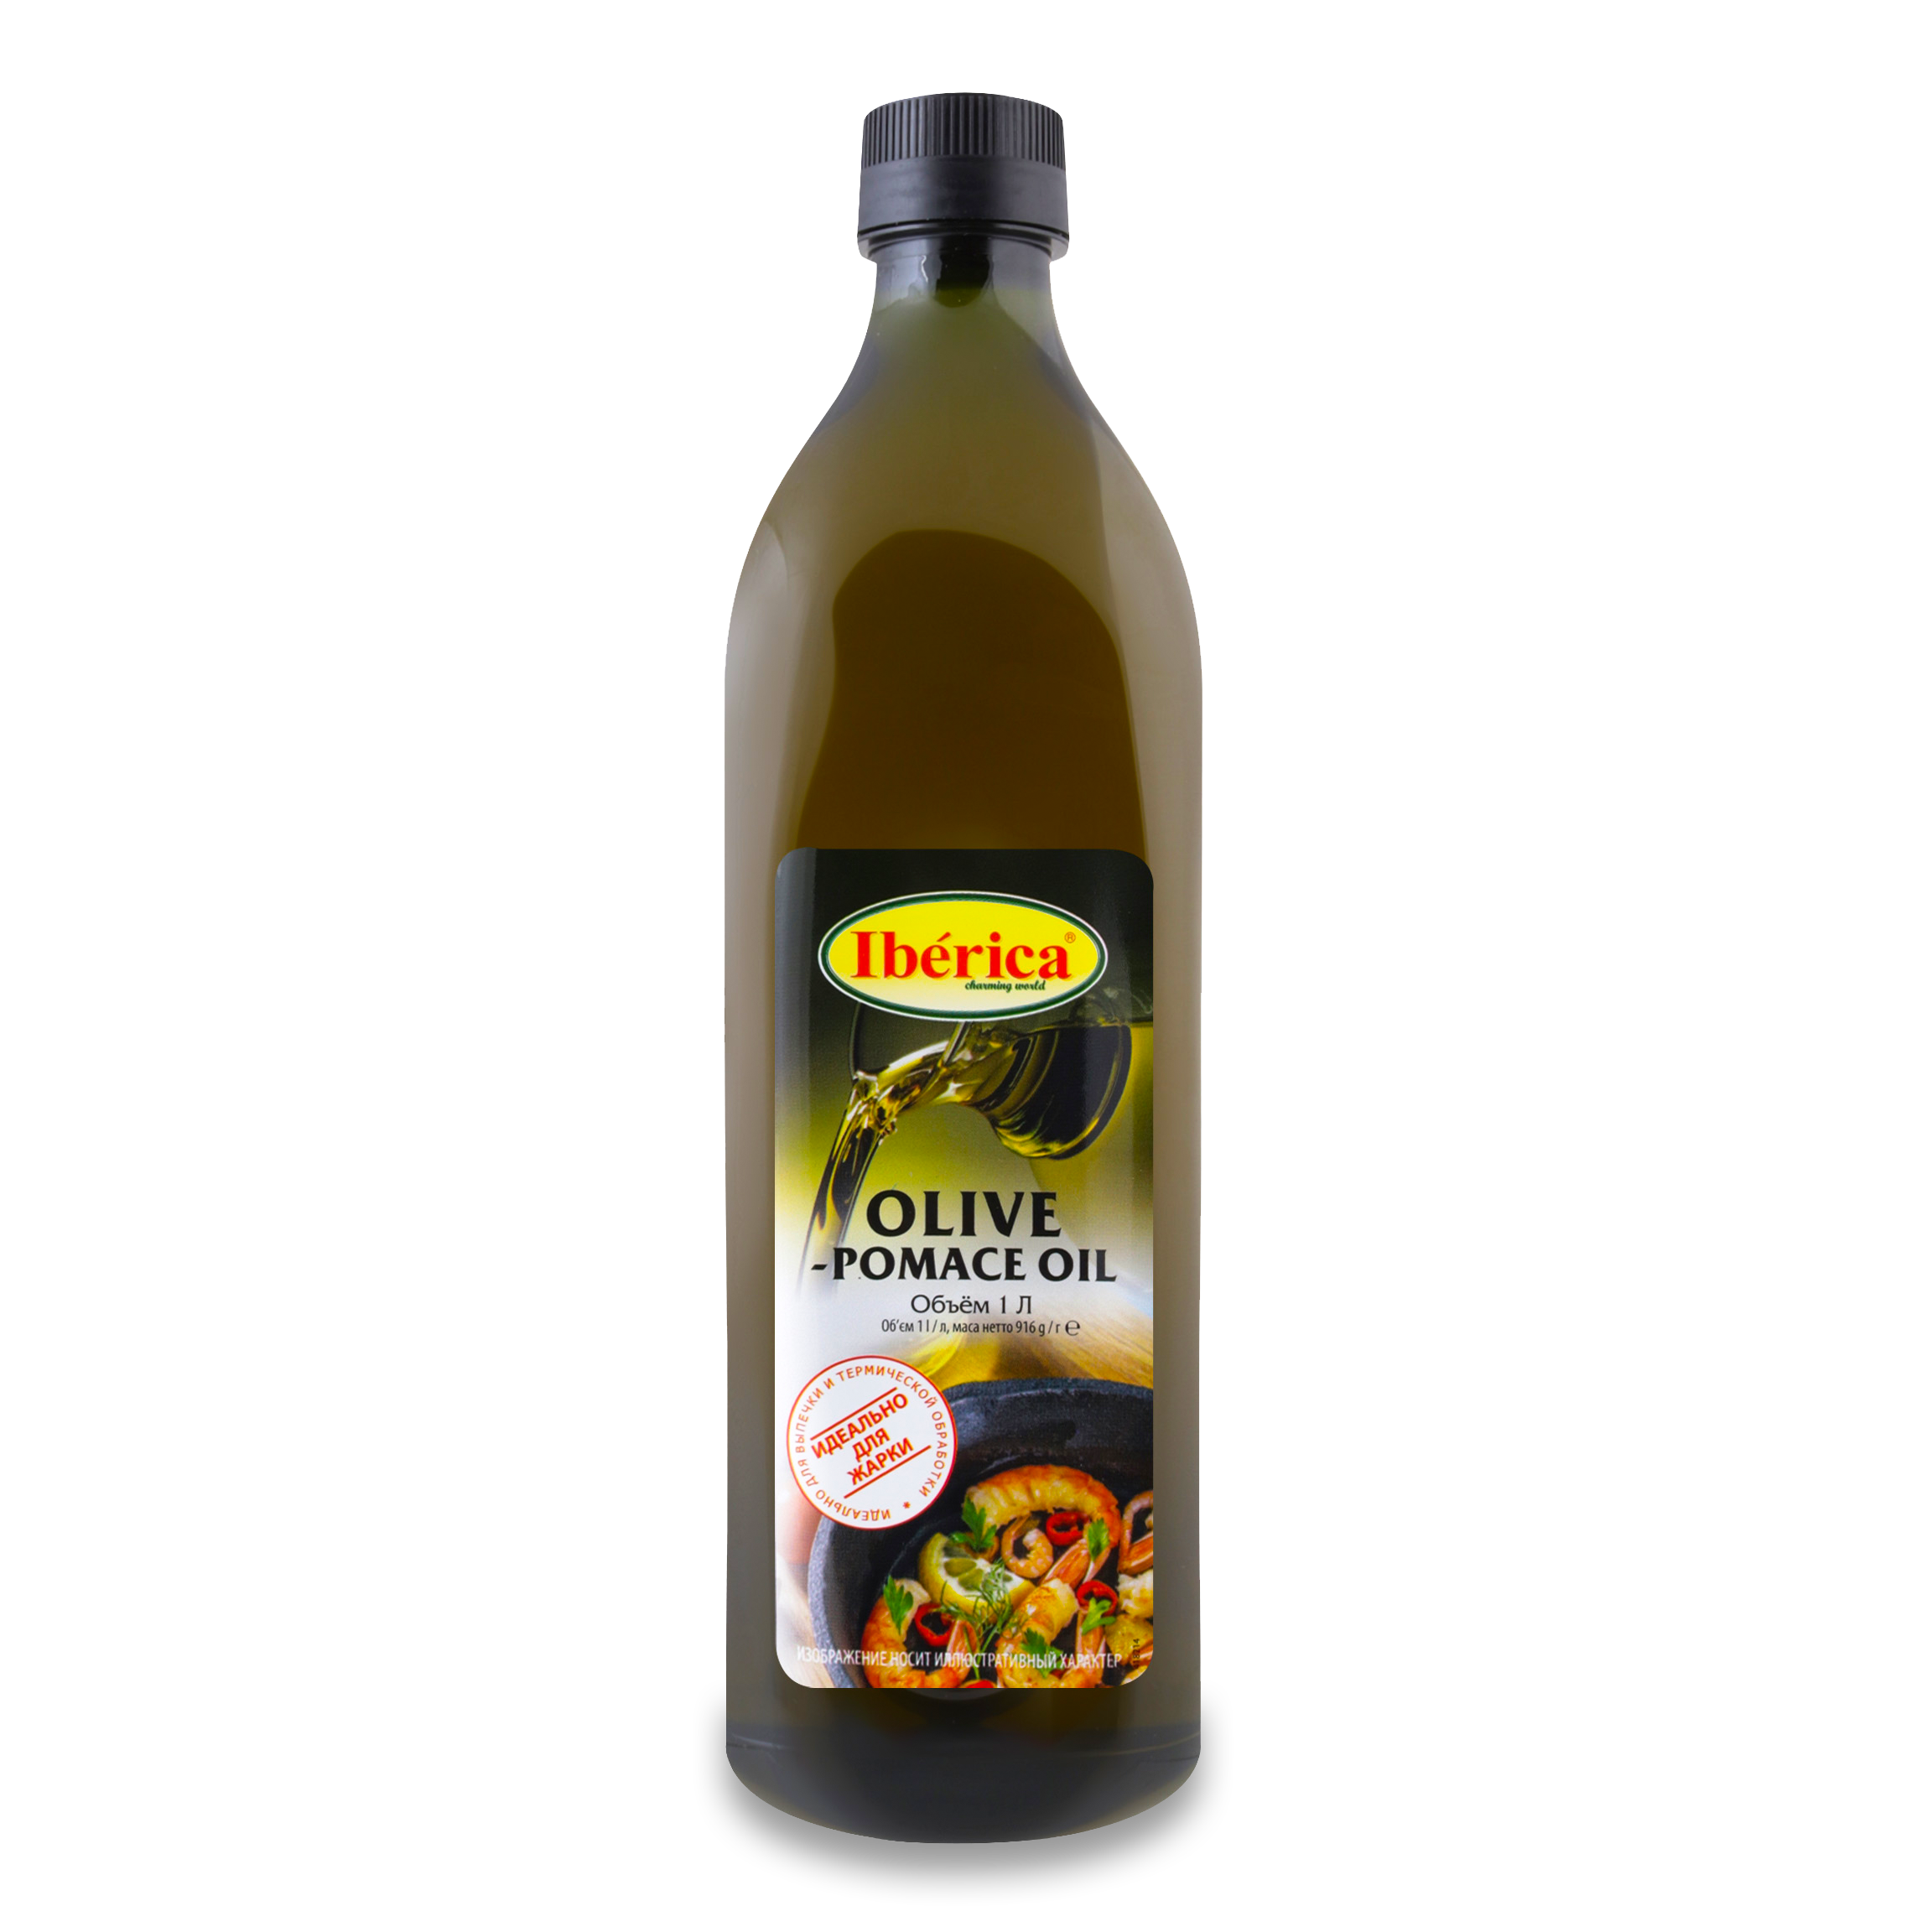 Iberica Olive Oil 1l plastic